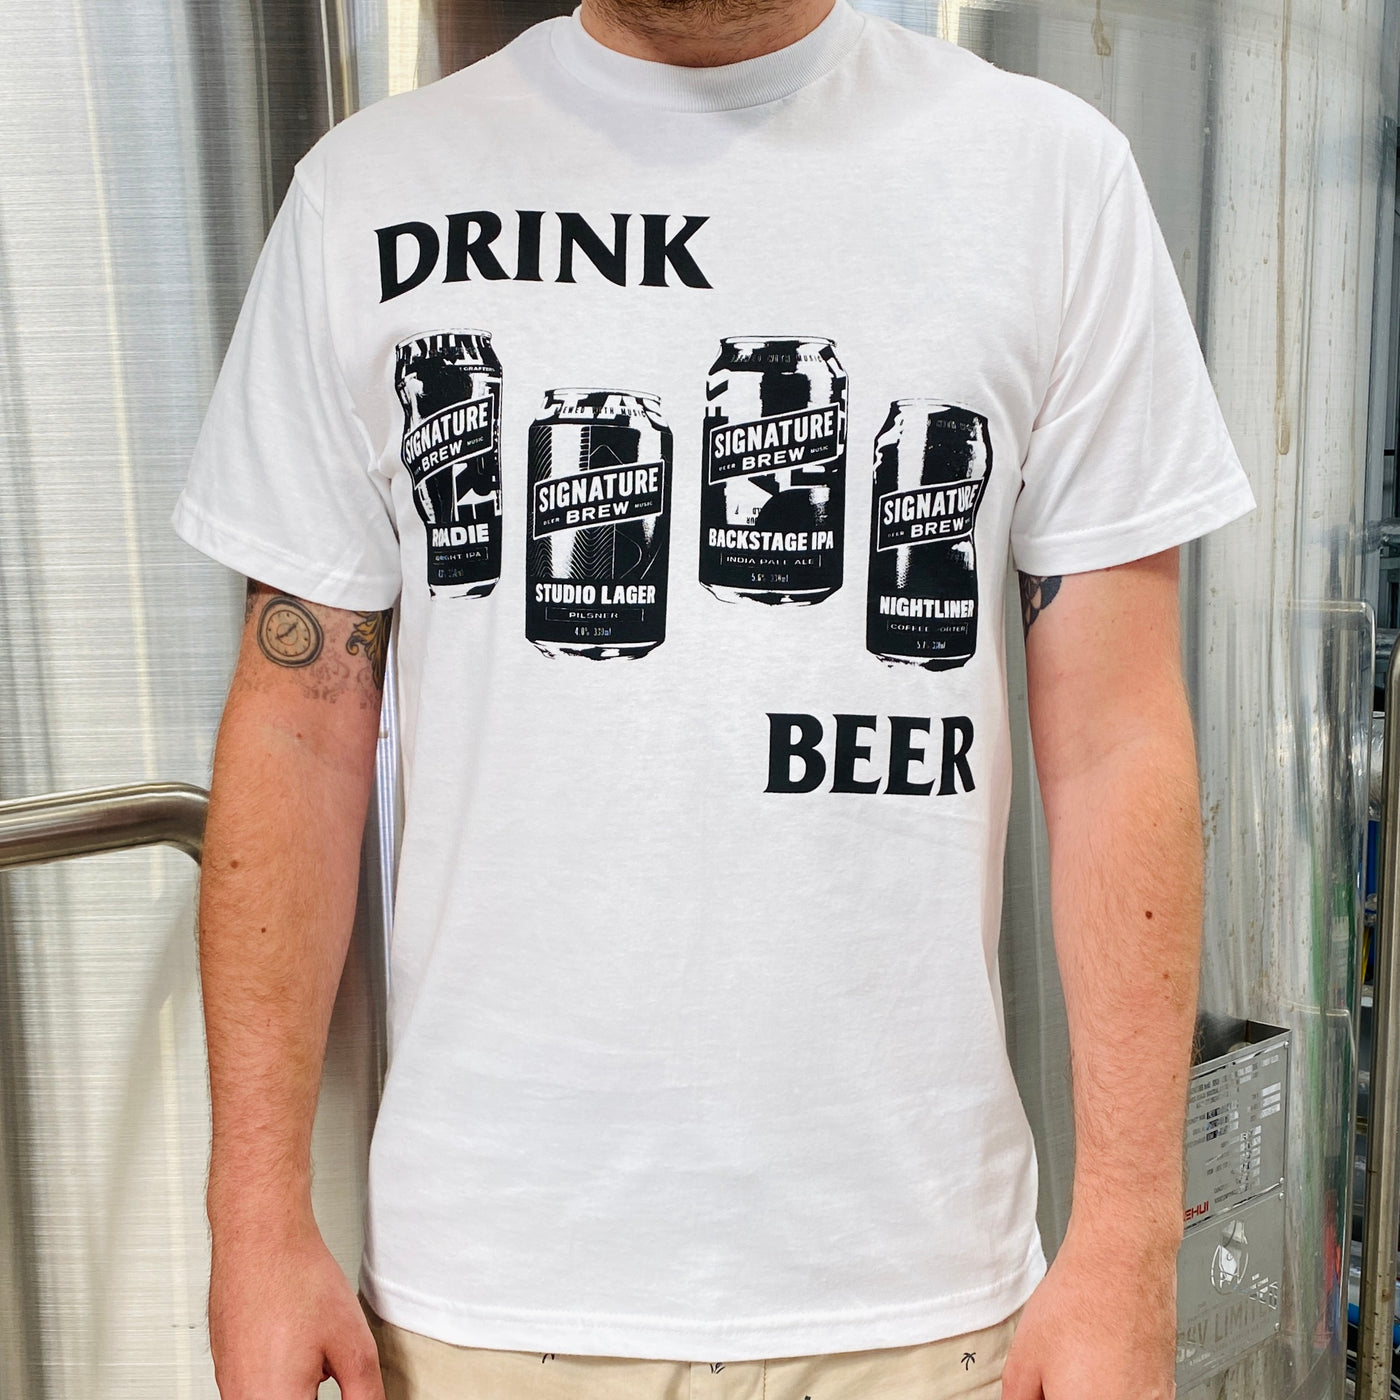 Drink Beer - T-Shirt